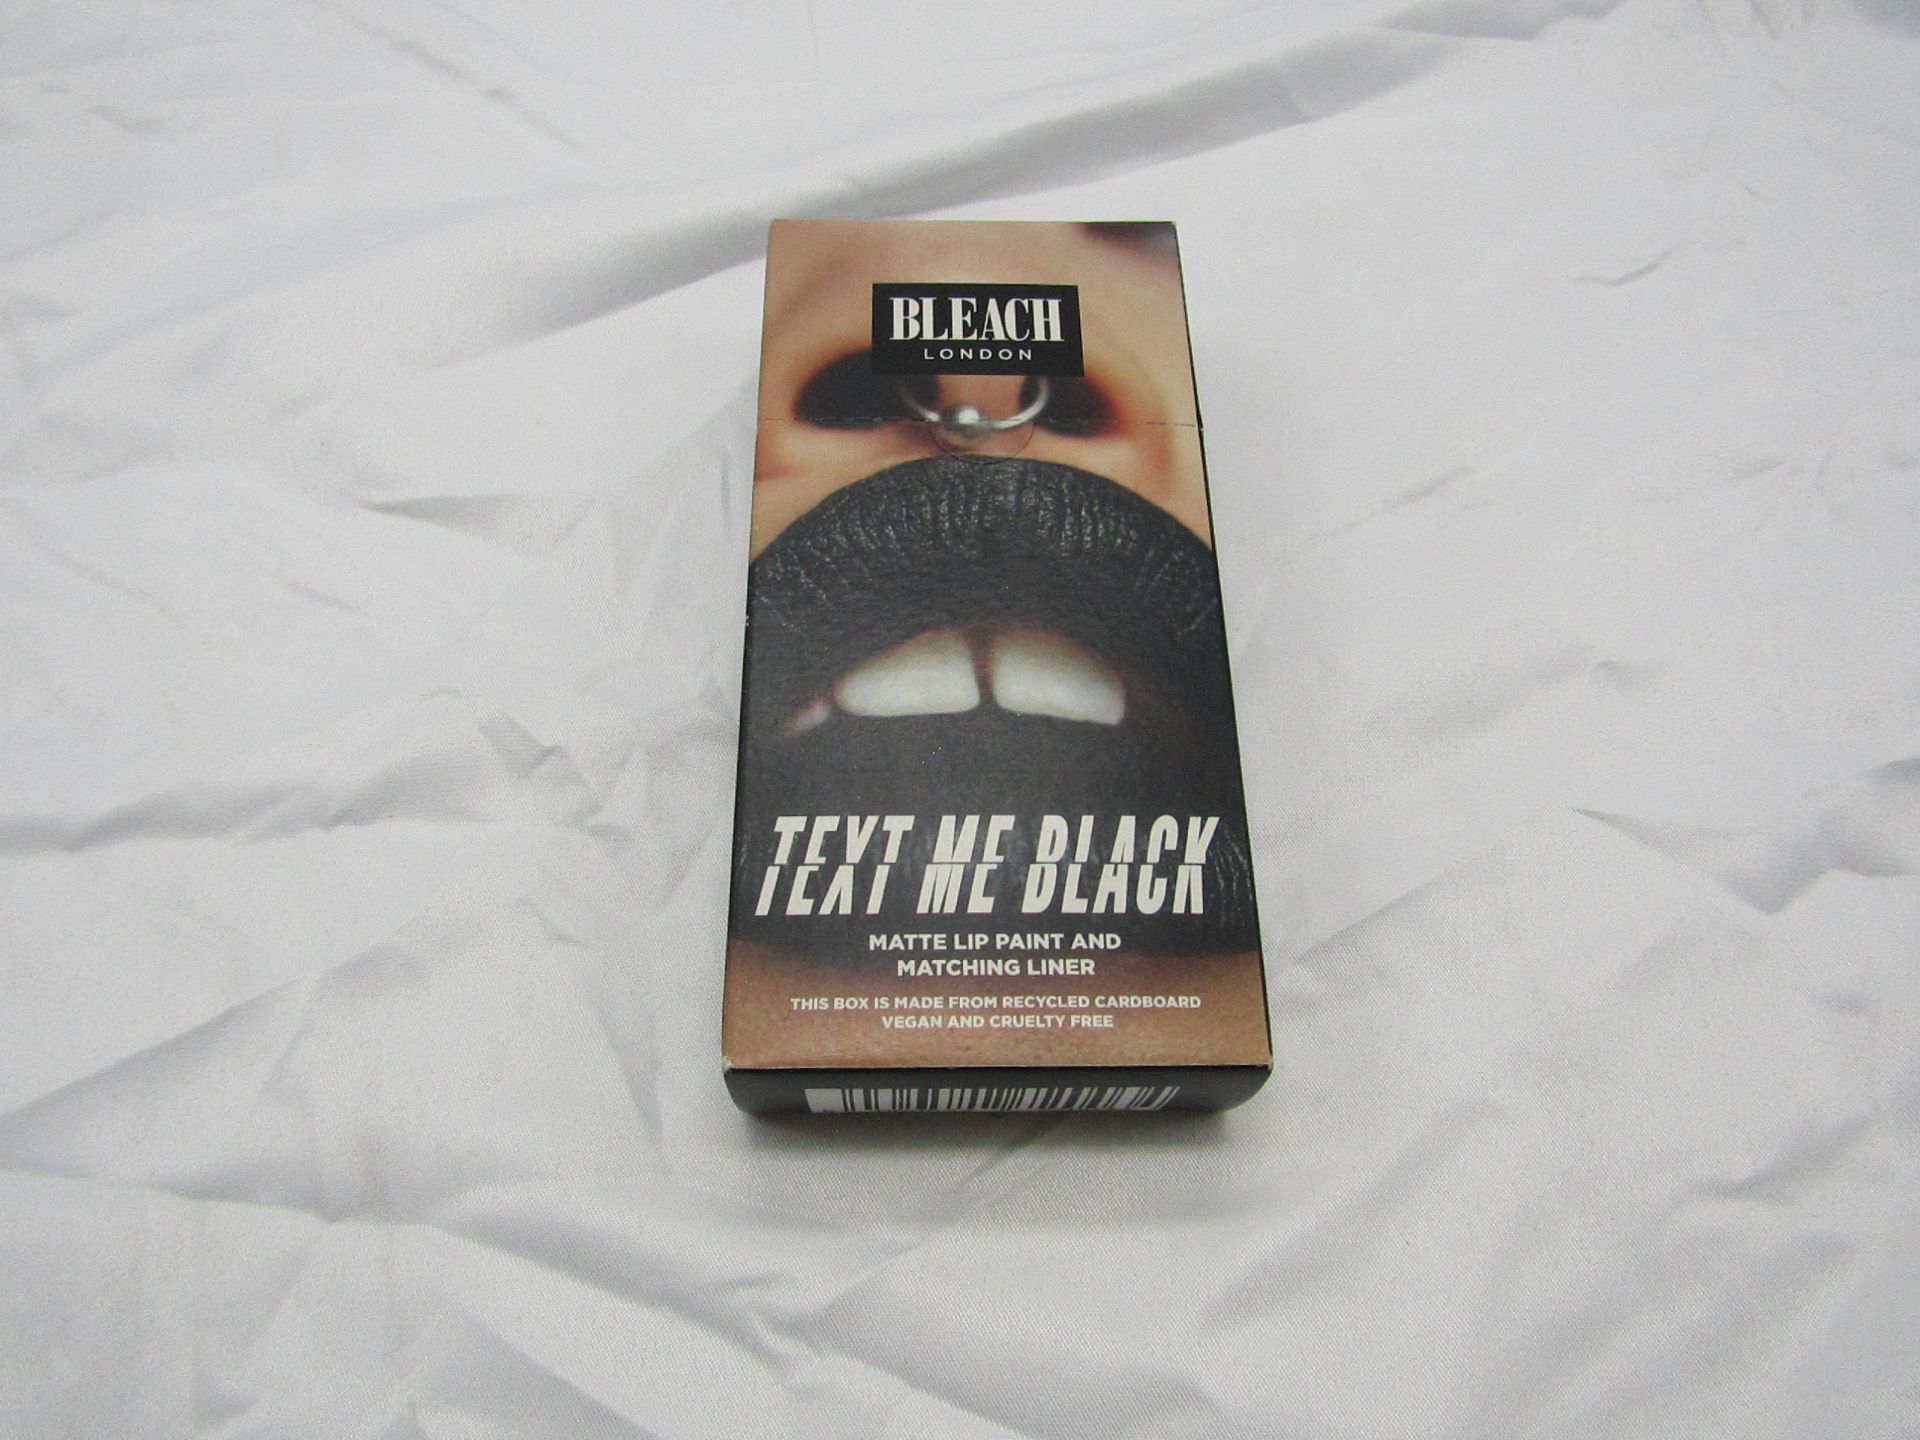 2x Bleach London - Text Me Black Matte Lip Paint & Matching Liner - New & Boxed.